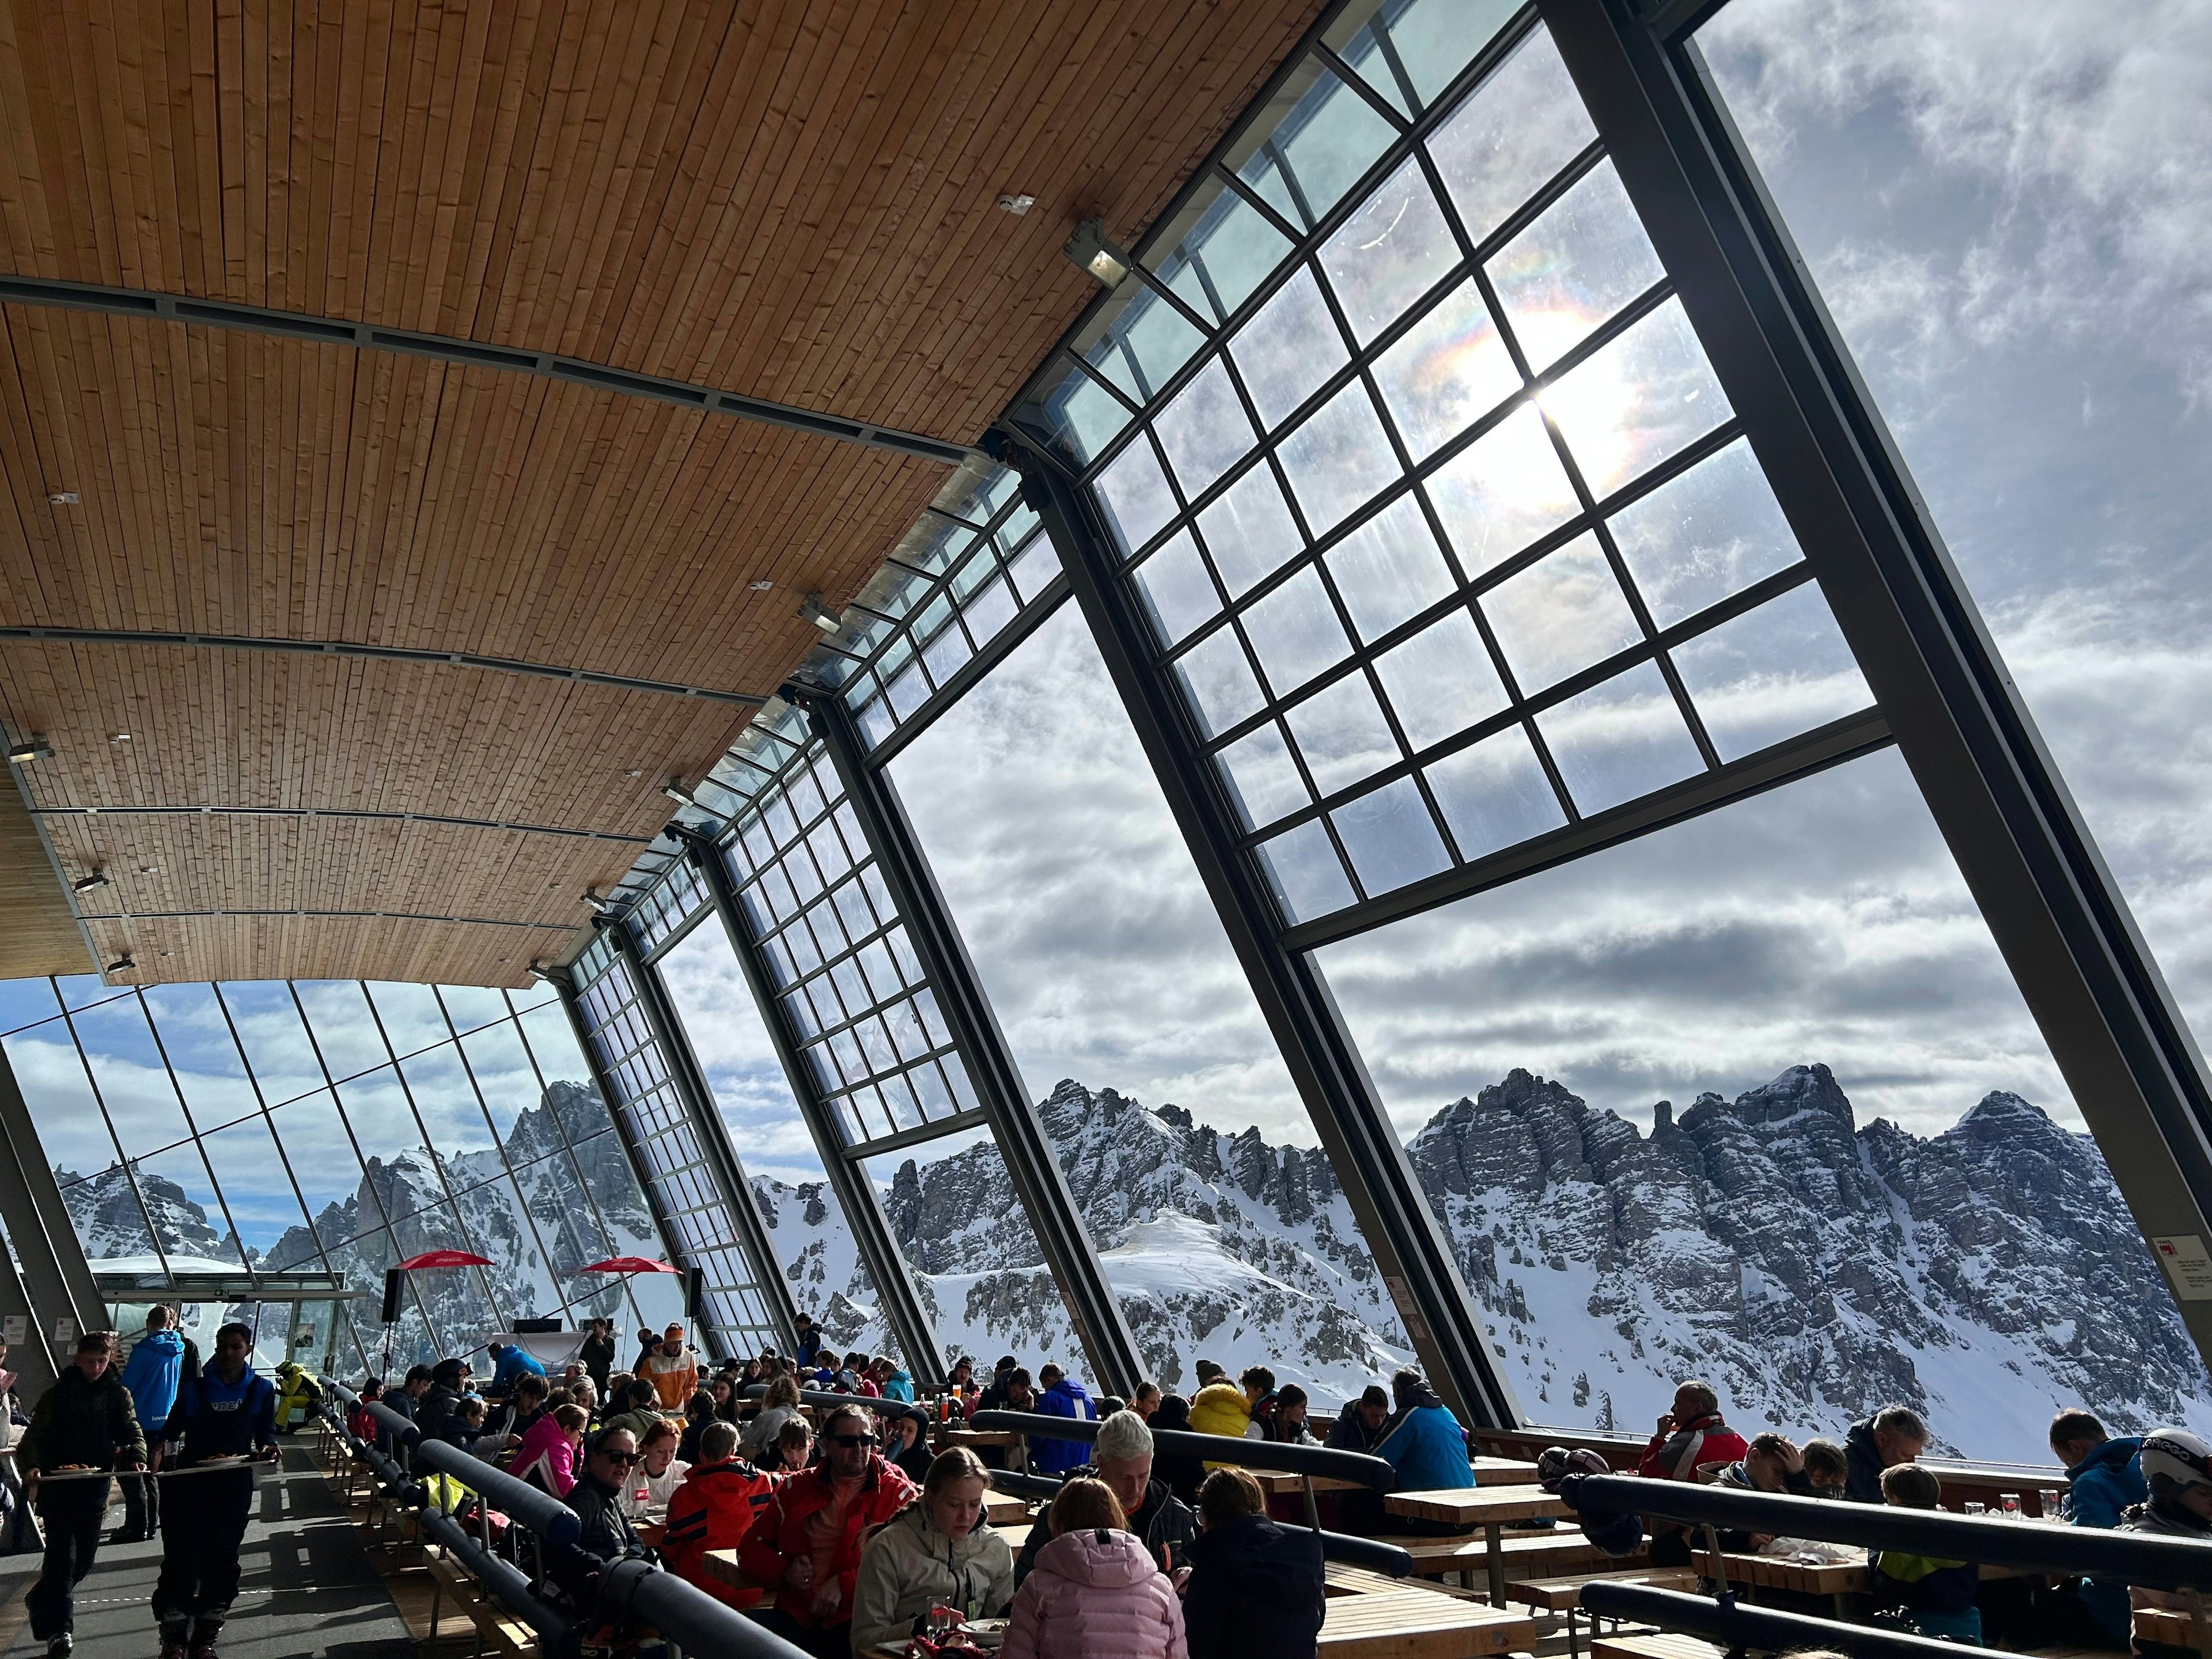 The Hoadl-Haus restaurant at Axamer Lizum ski resort in Innsbruck, Austria， offers stunning vistas for the après-ski crowd. Photo: Jing Daily